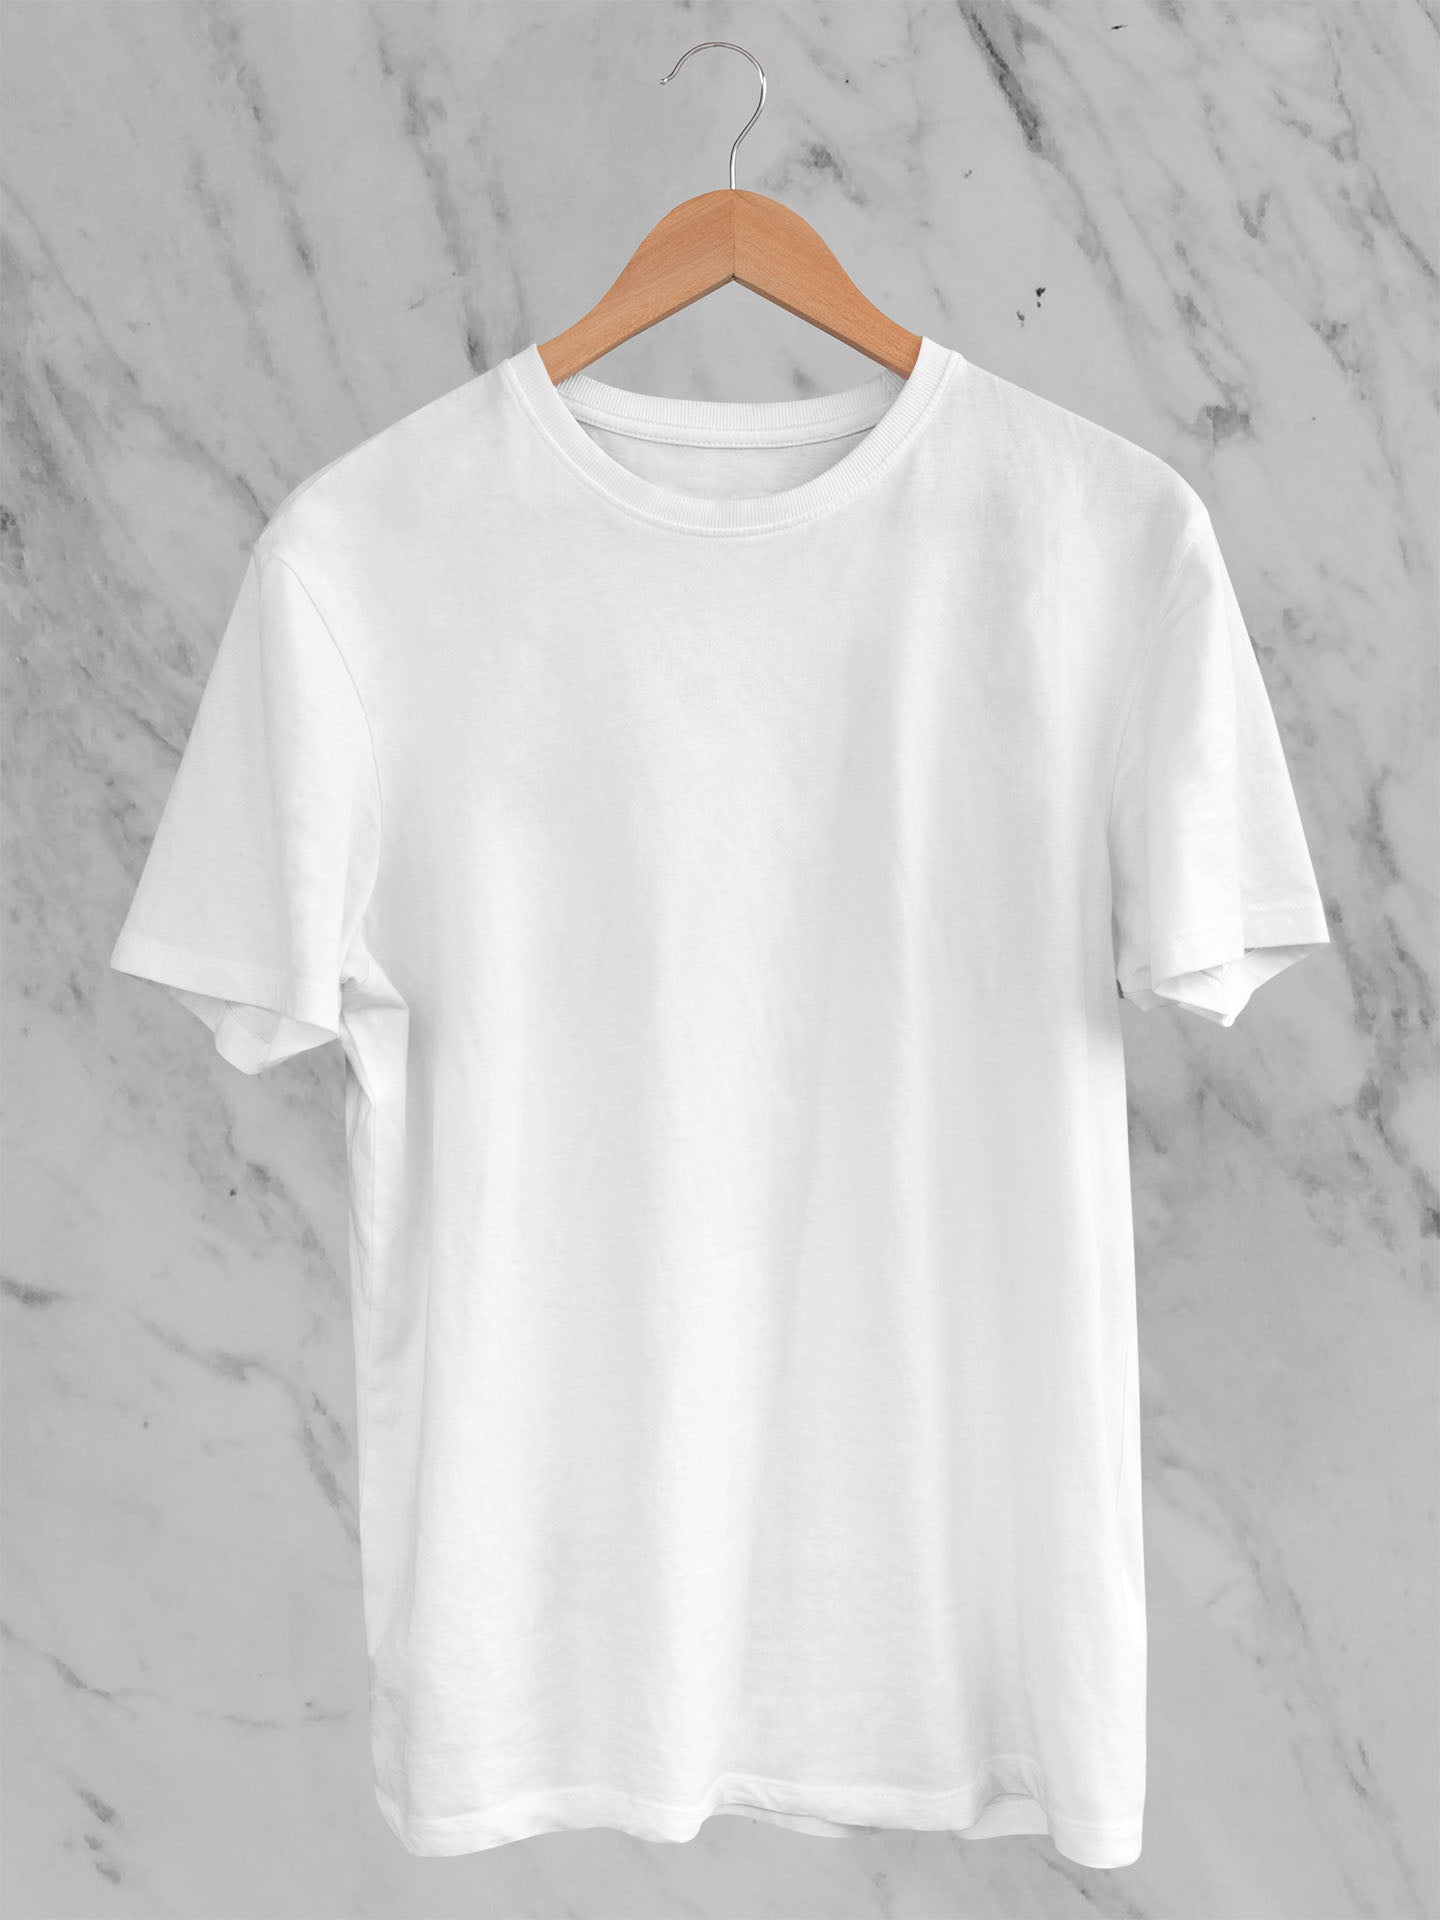 Basic White Printed T Shirt